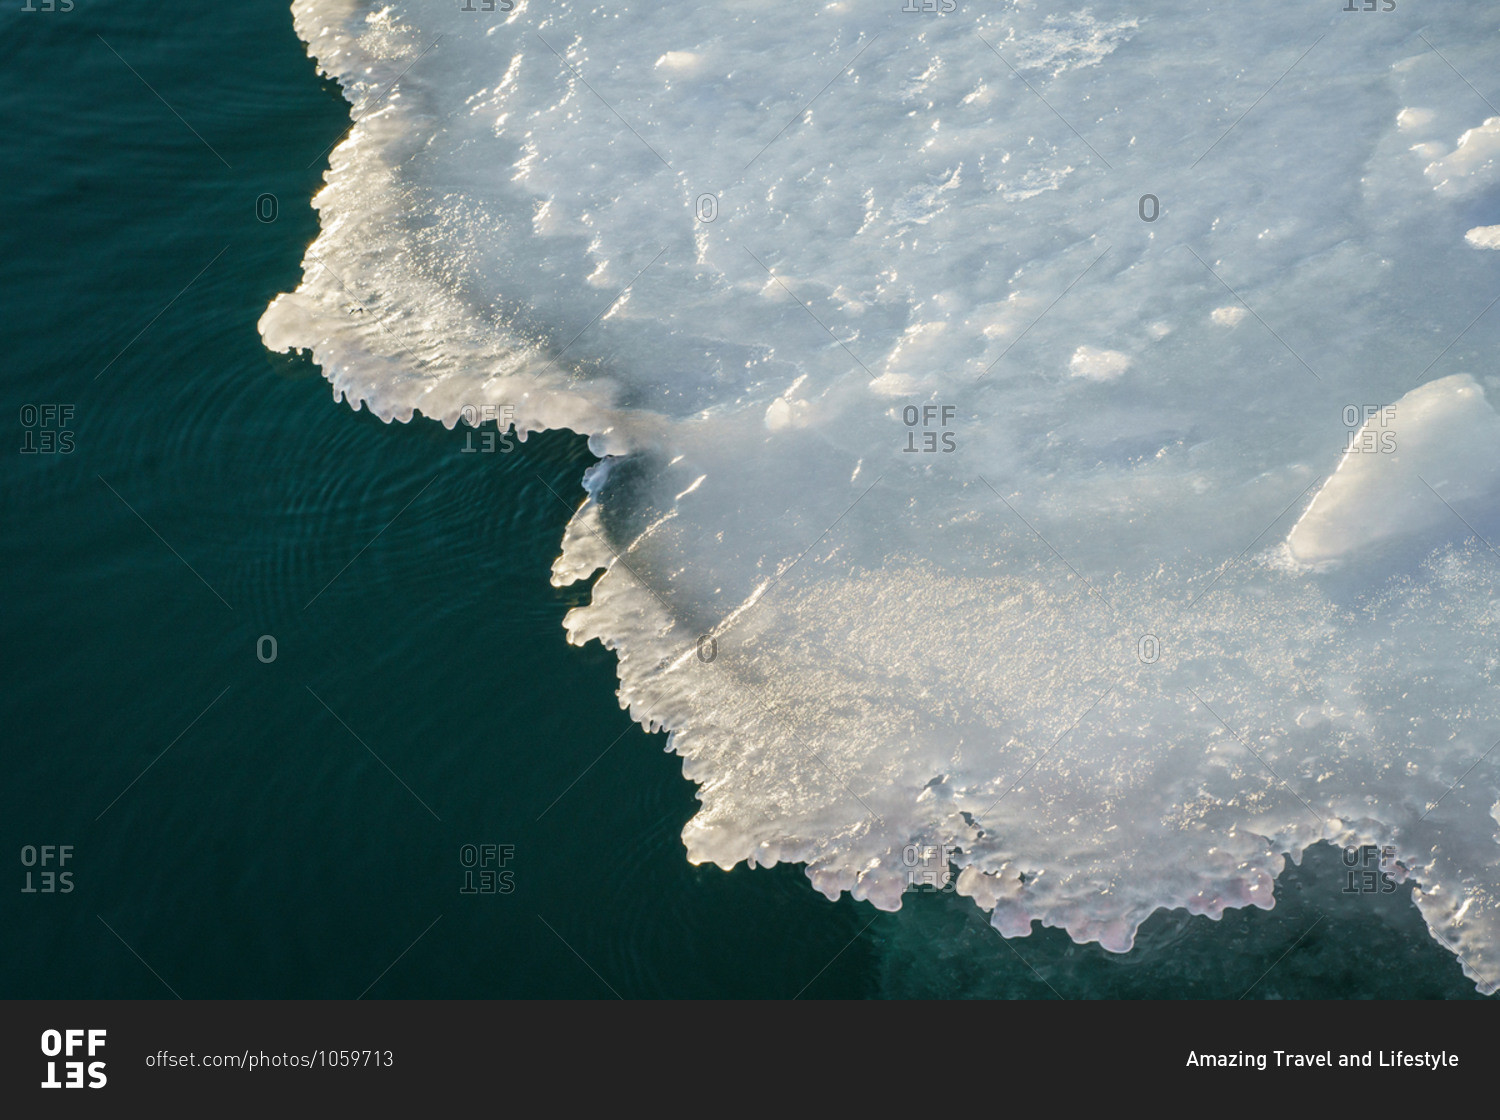 Pack ice at St Jonsfjorden, North Spitsbergen, Svalbard and Jan Mayen, as seen on an Arctic cruise.